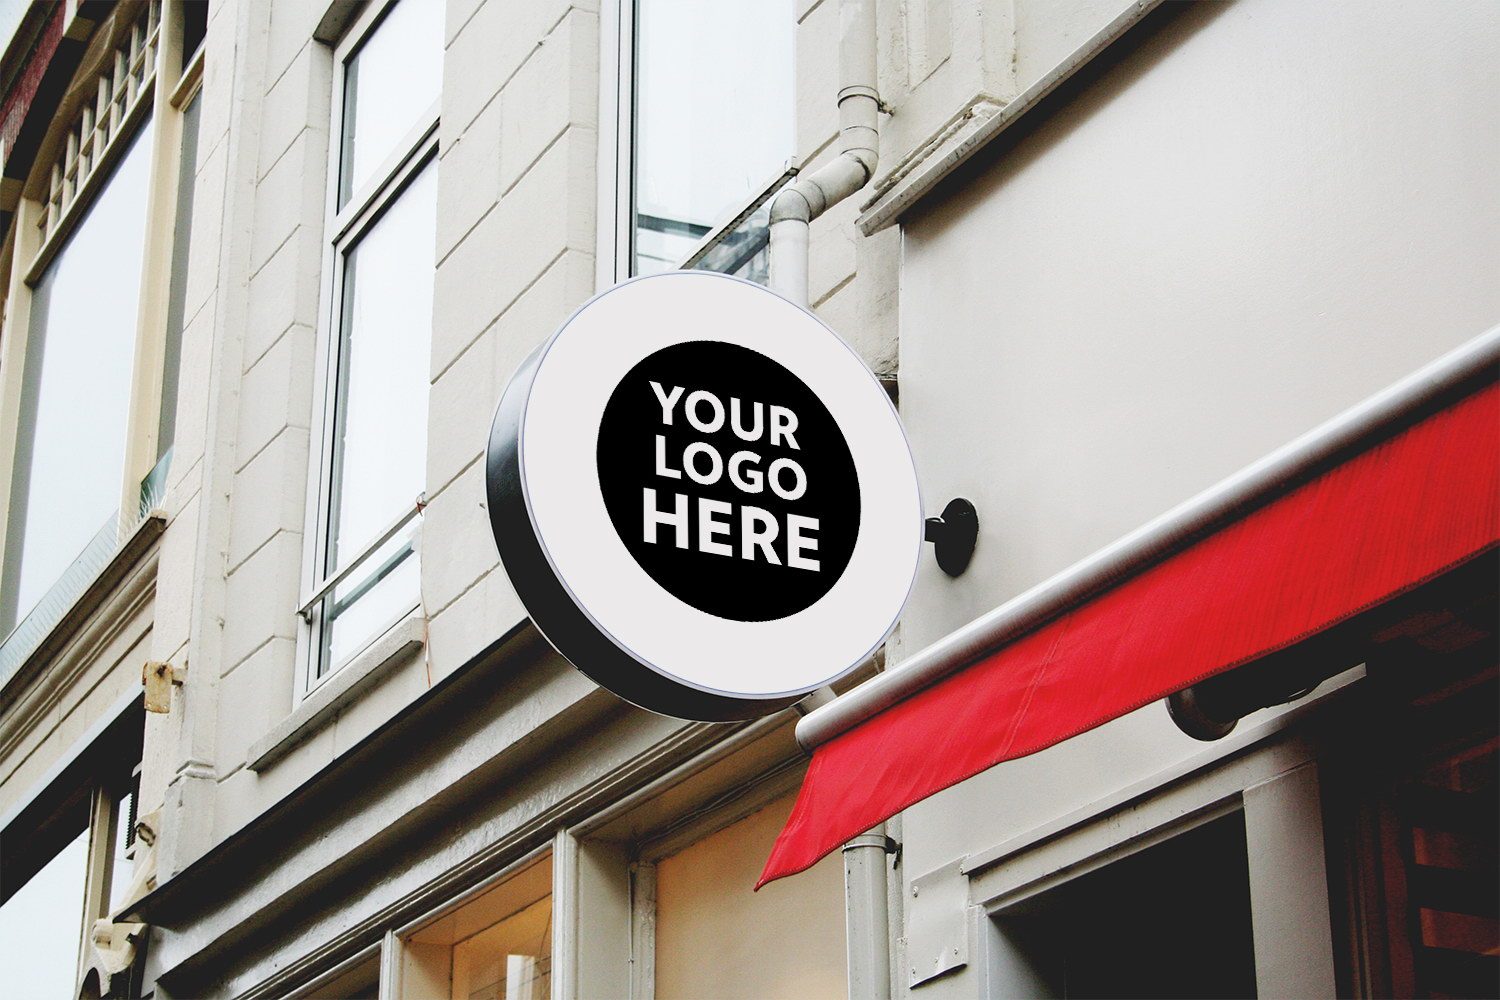 8 Free Shop Restaurant Cafe Office Signs Mockup